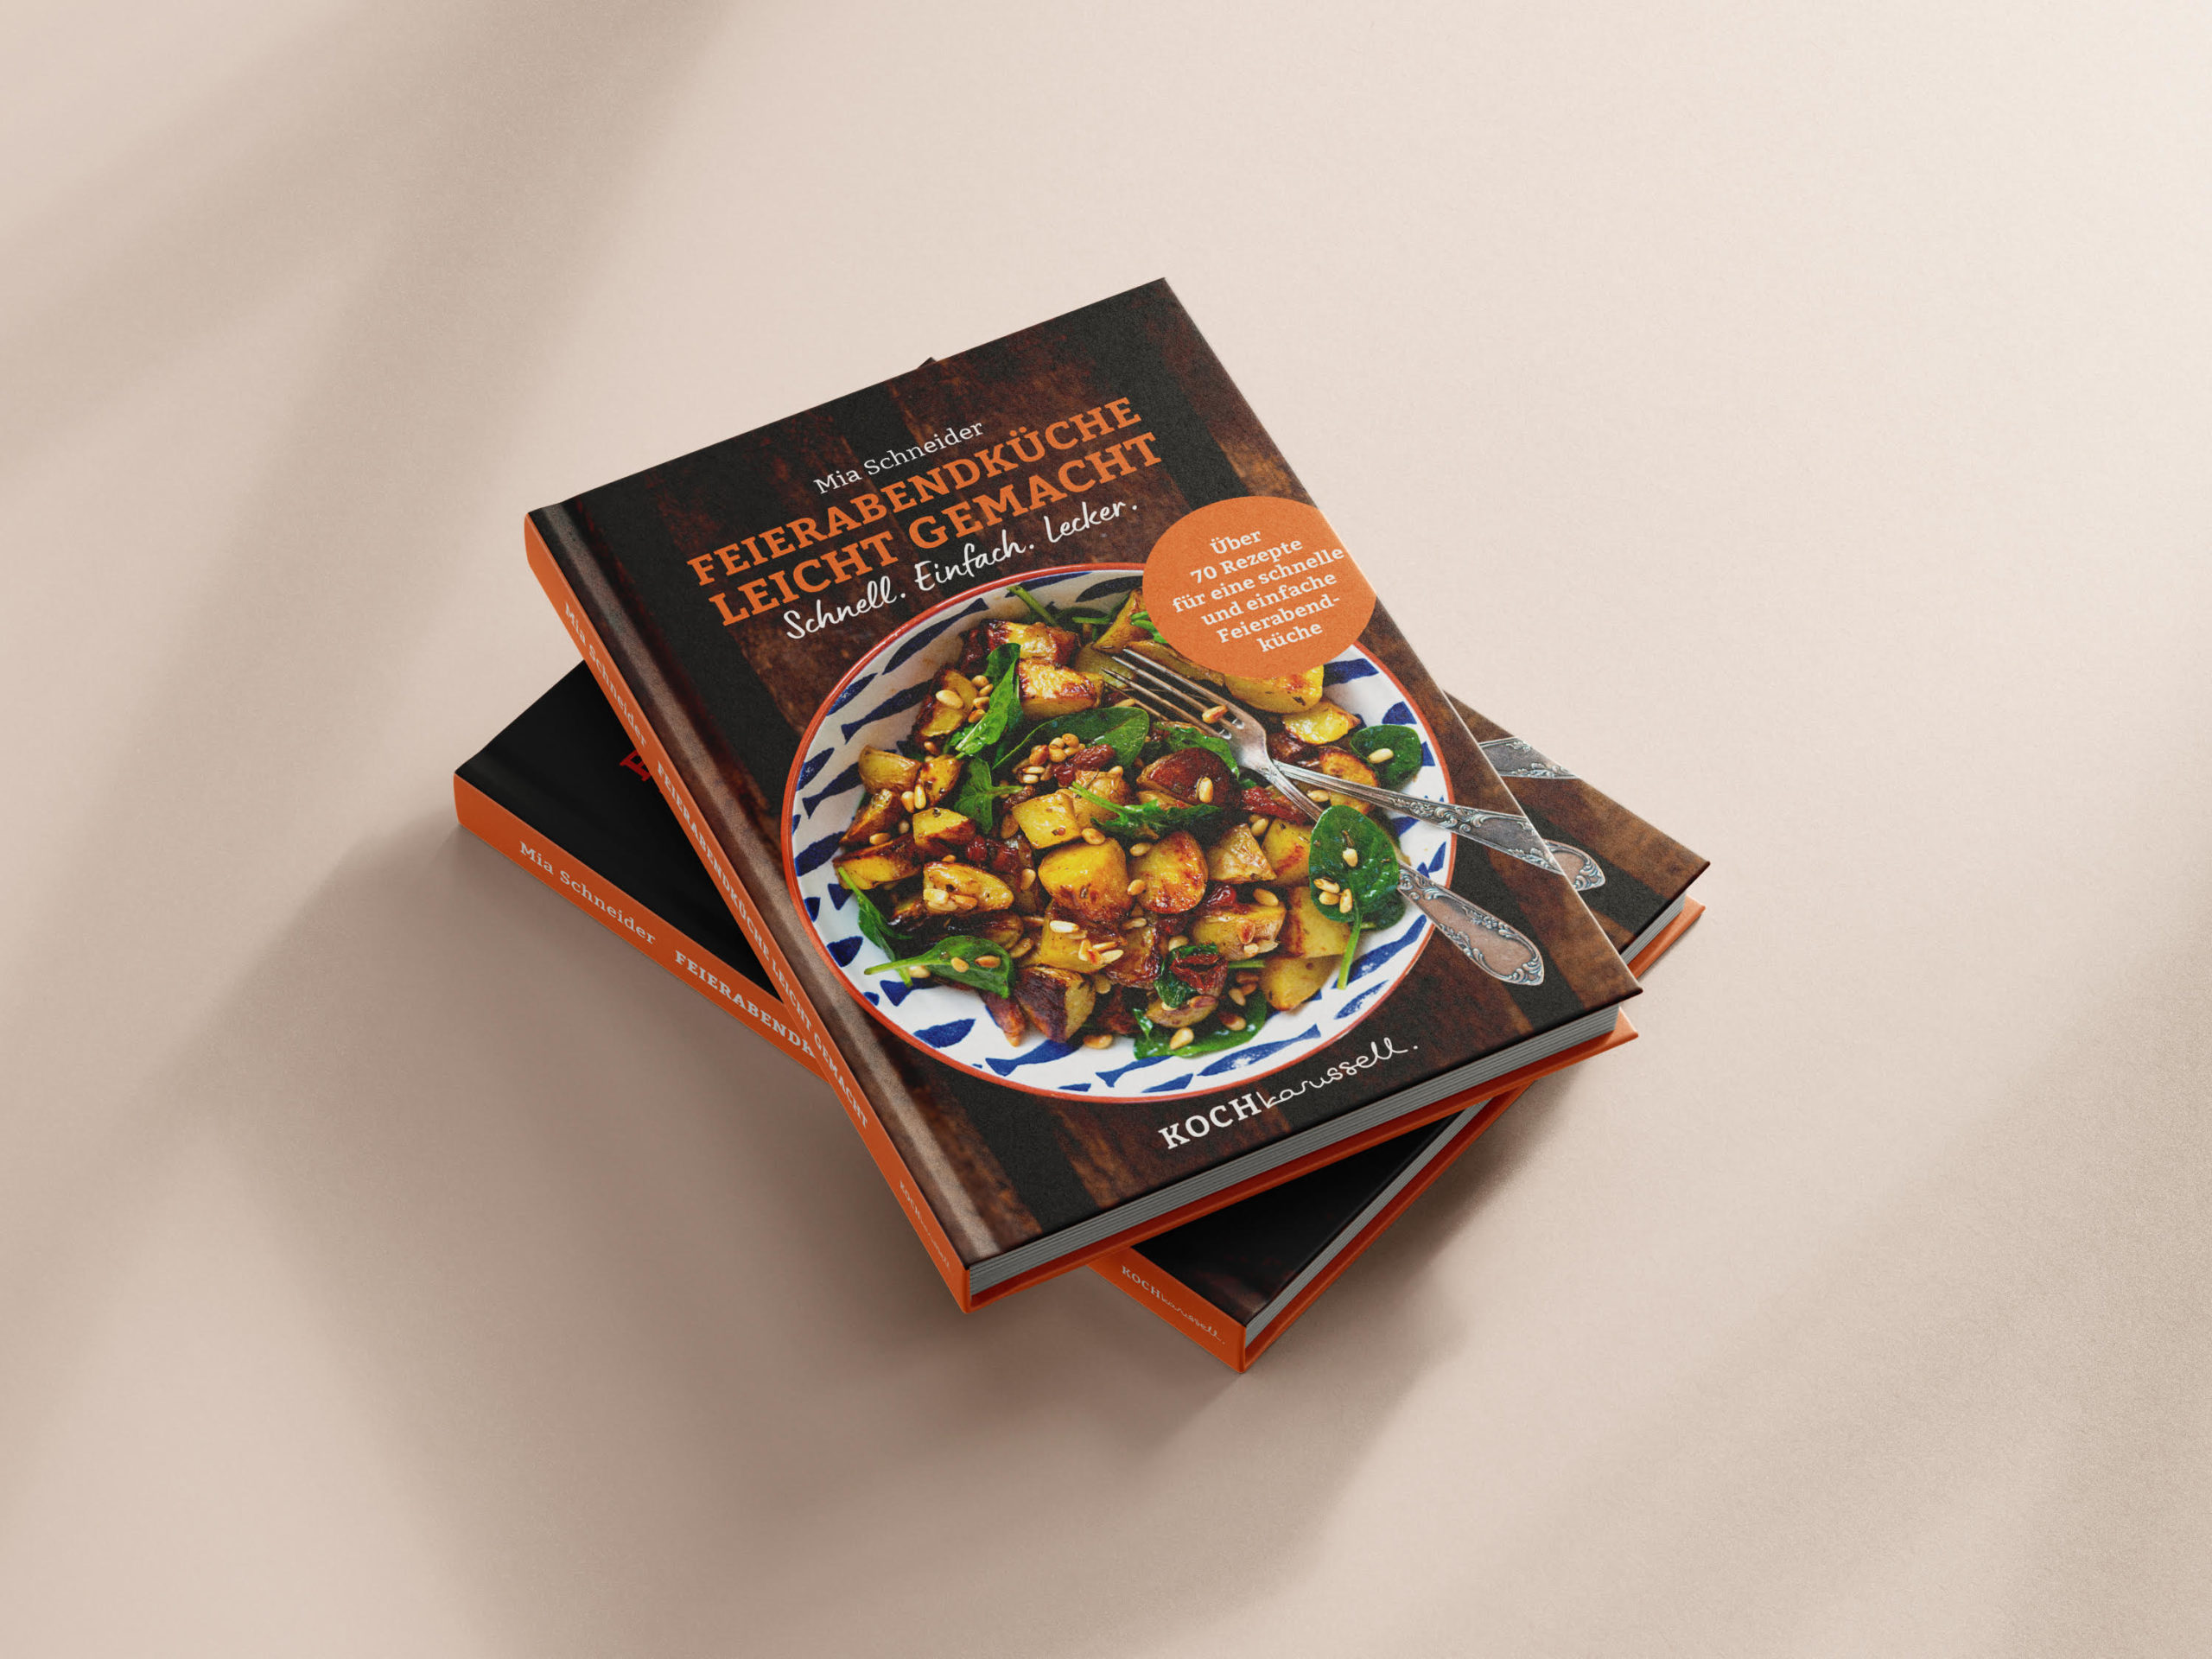 Das erste Kochkarussell-Kochbuch. Feierabendküche leicht gemacht in der XXL Jubiläumsedition. Das Kochbuch zum Blog.